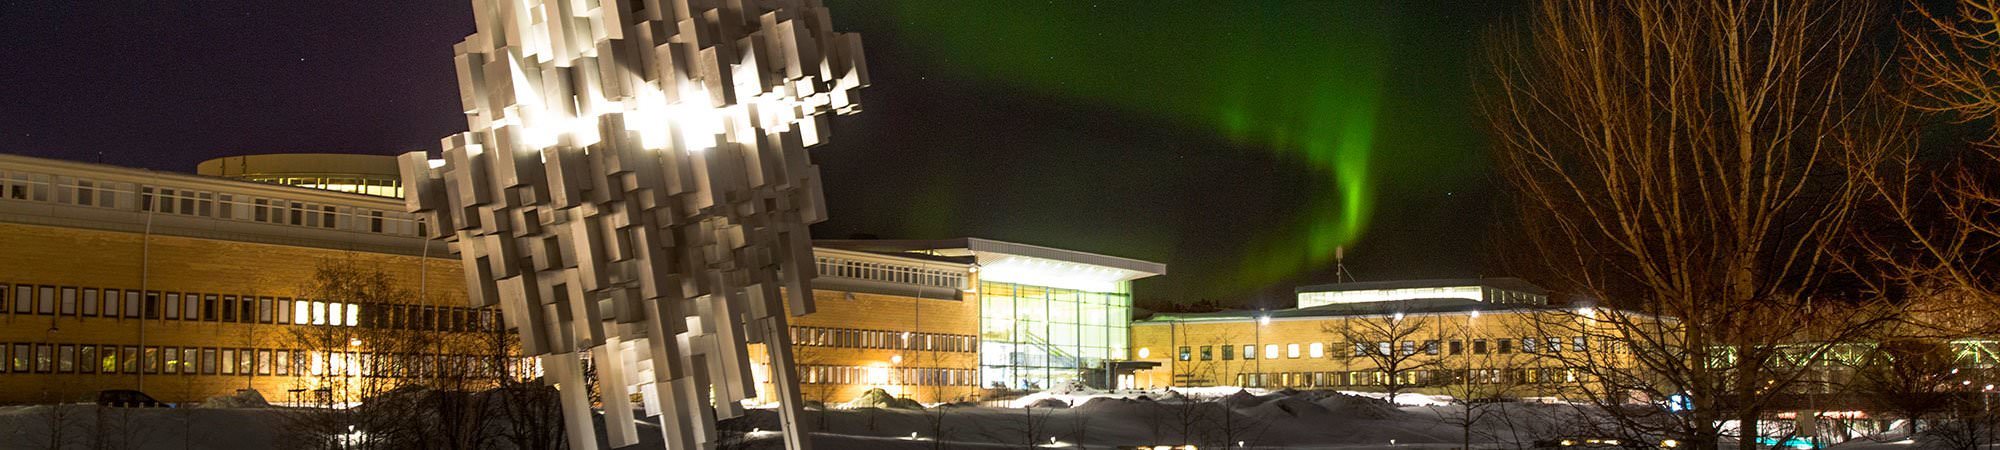 Umeå University, Sweden